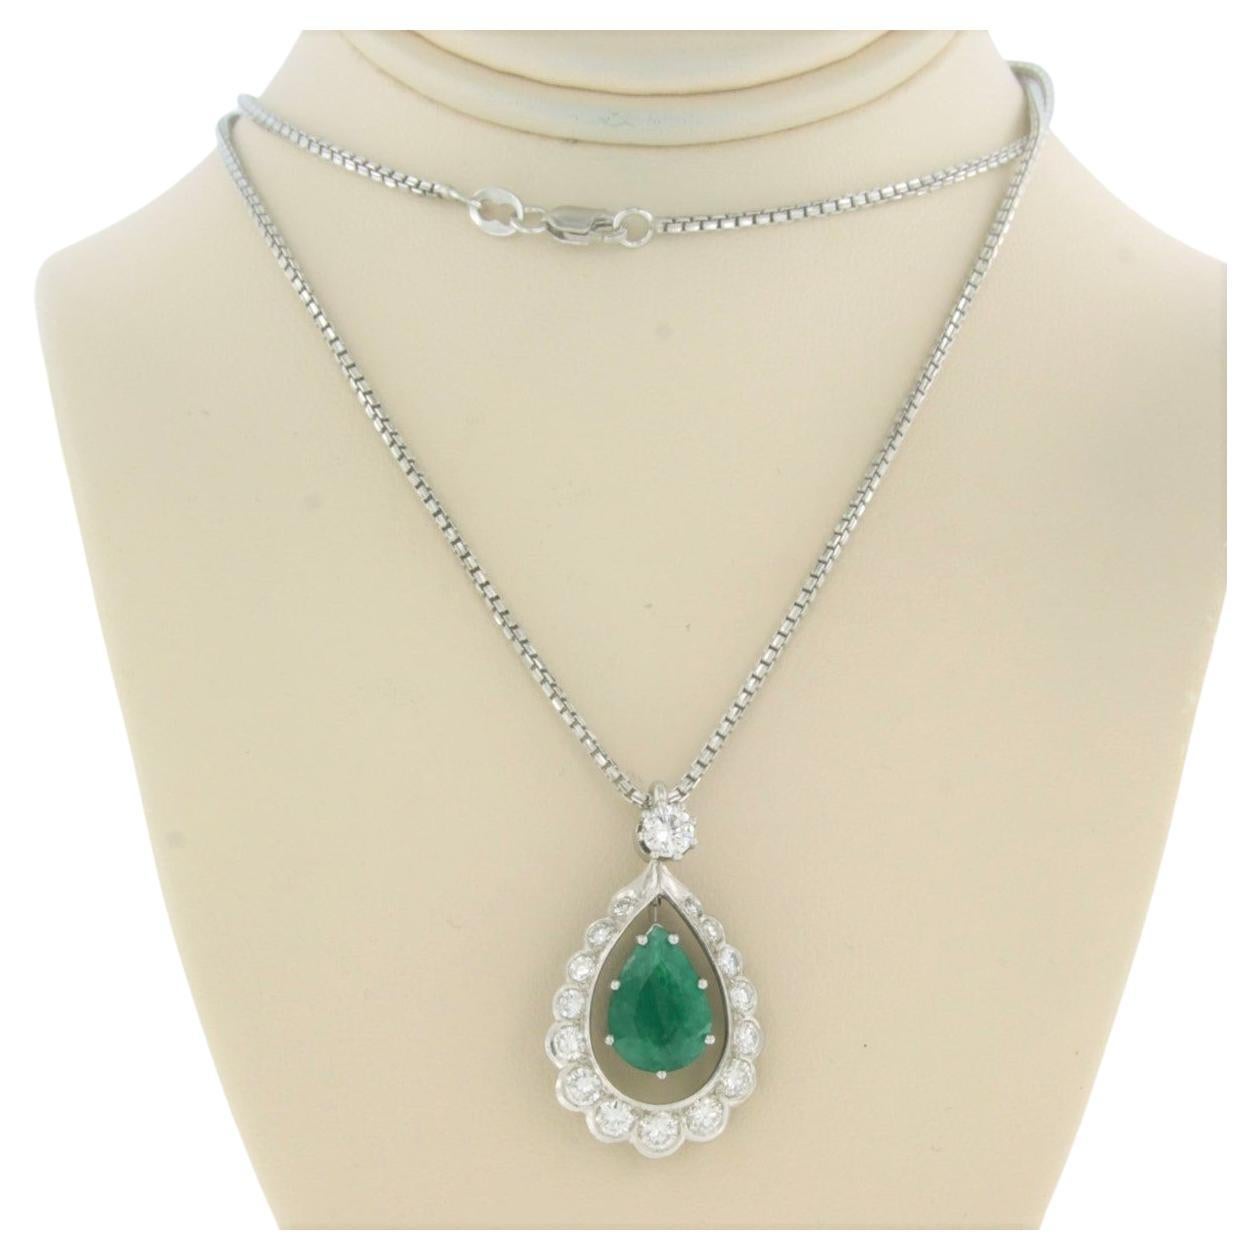 Chain and pendant set witj emerald and diamonds 18k white gold